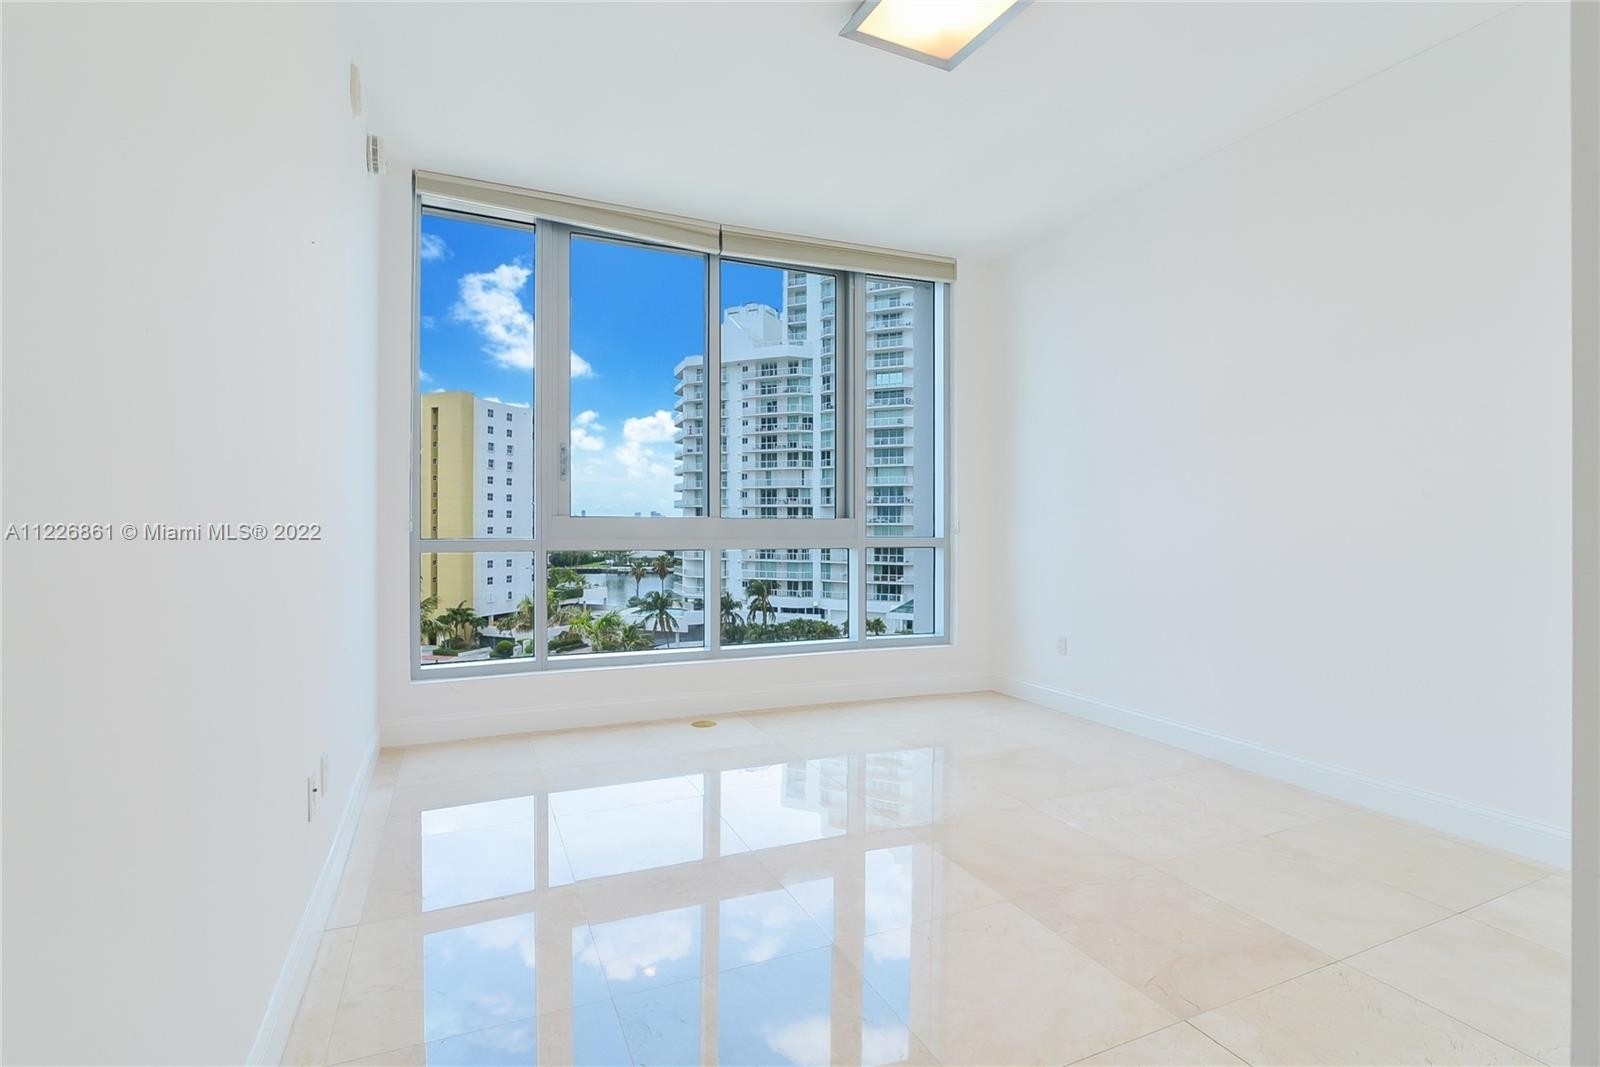 9. Condominiums for Sale at 5959 Collins Ave , 702 Ocean Front, Miami Beach, FL 33140